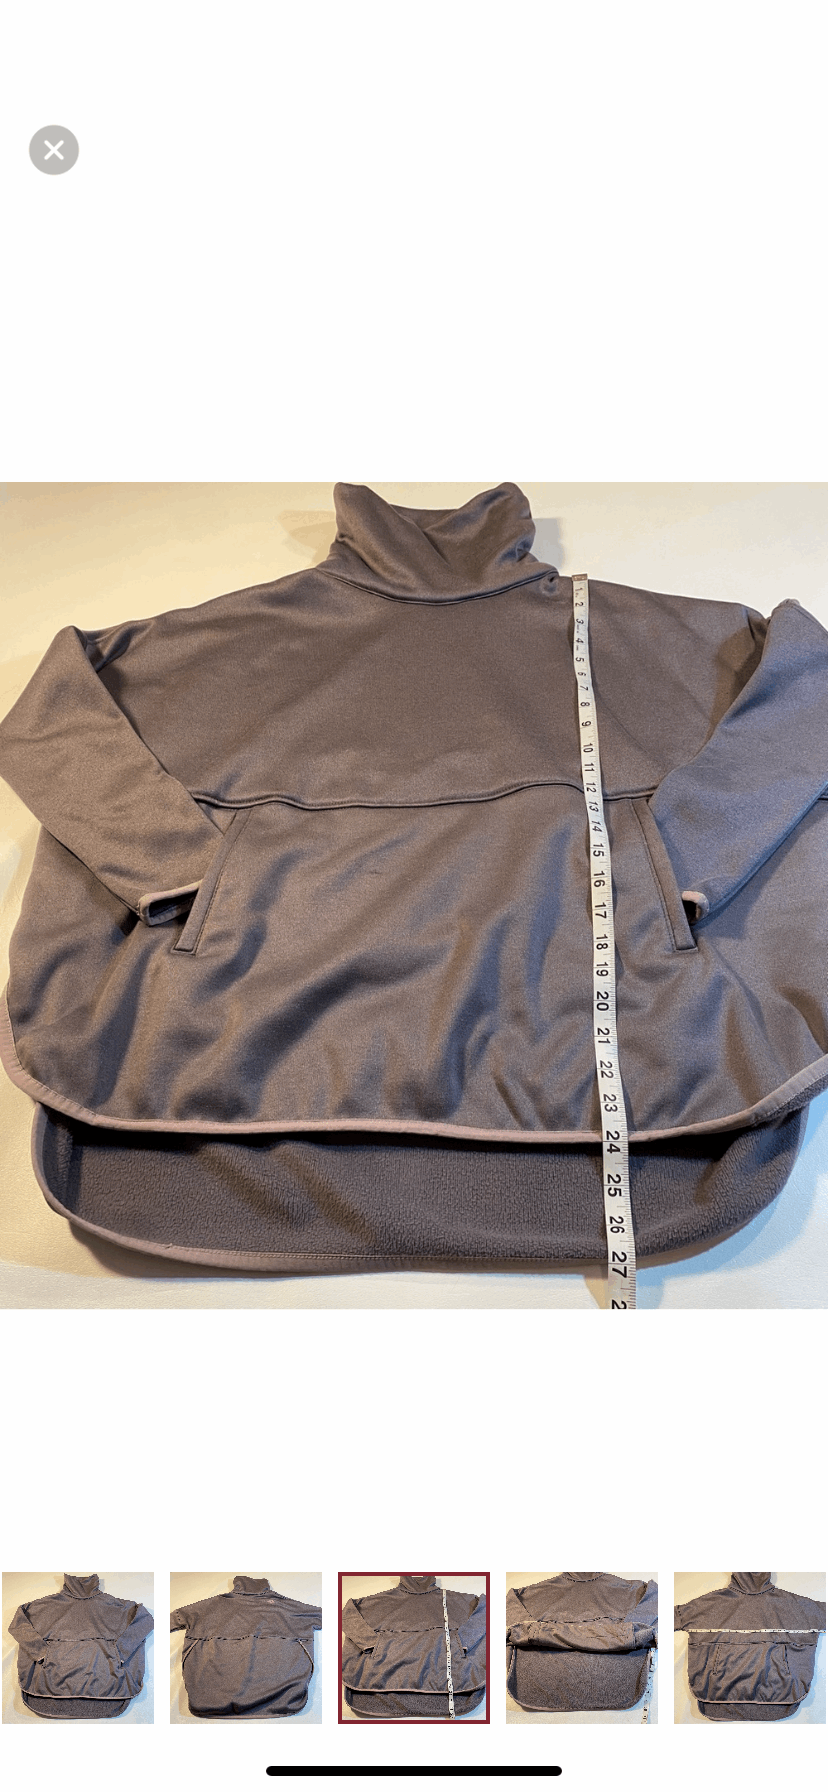 TNF North Face S/M Gray Cozy Slacker Fleece Lined Hi-Low Sweatshirt